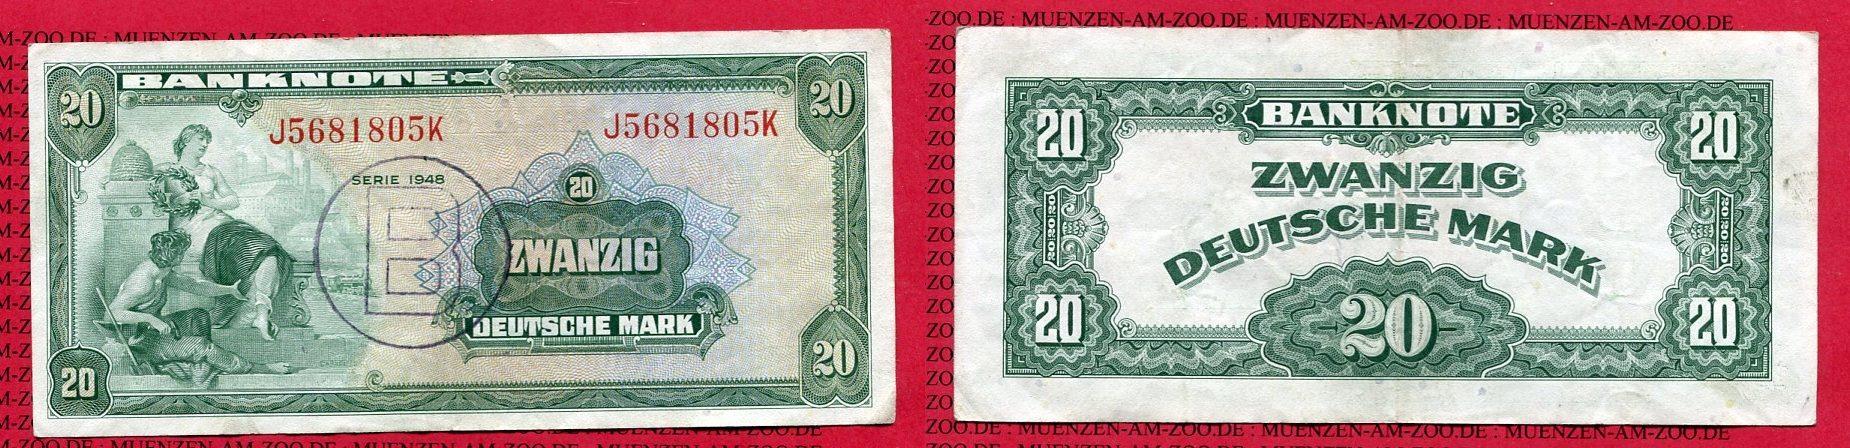 Foto Bundesrepublik Deutschland berlin 20 Dm Deutsche Mark Kopfgeld 1948 foto 63153